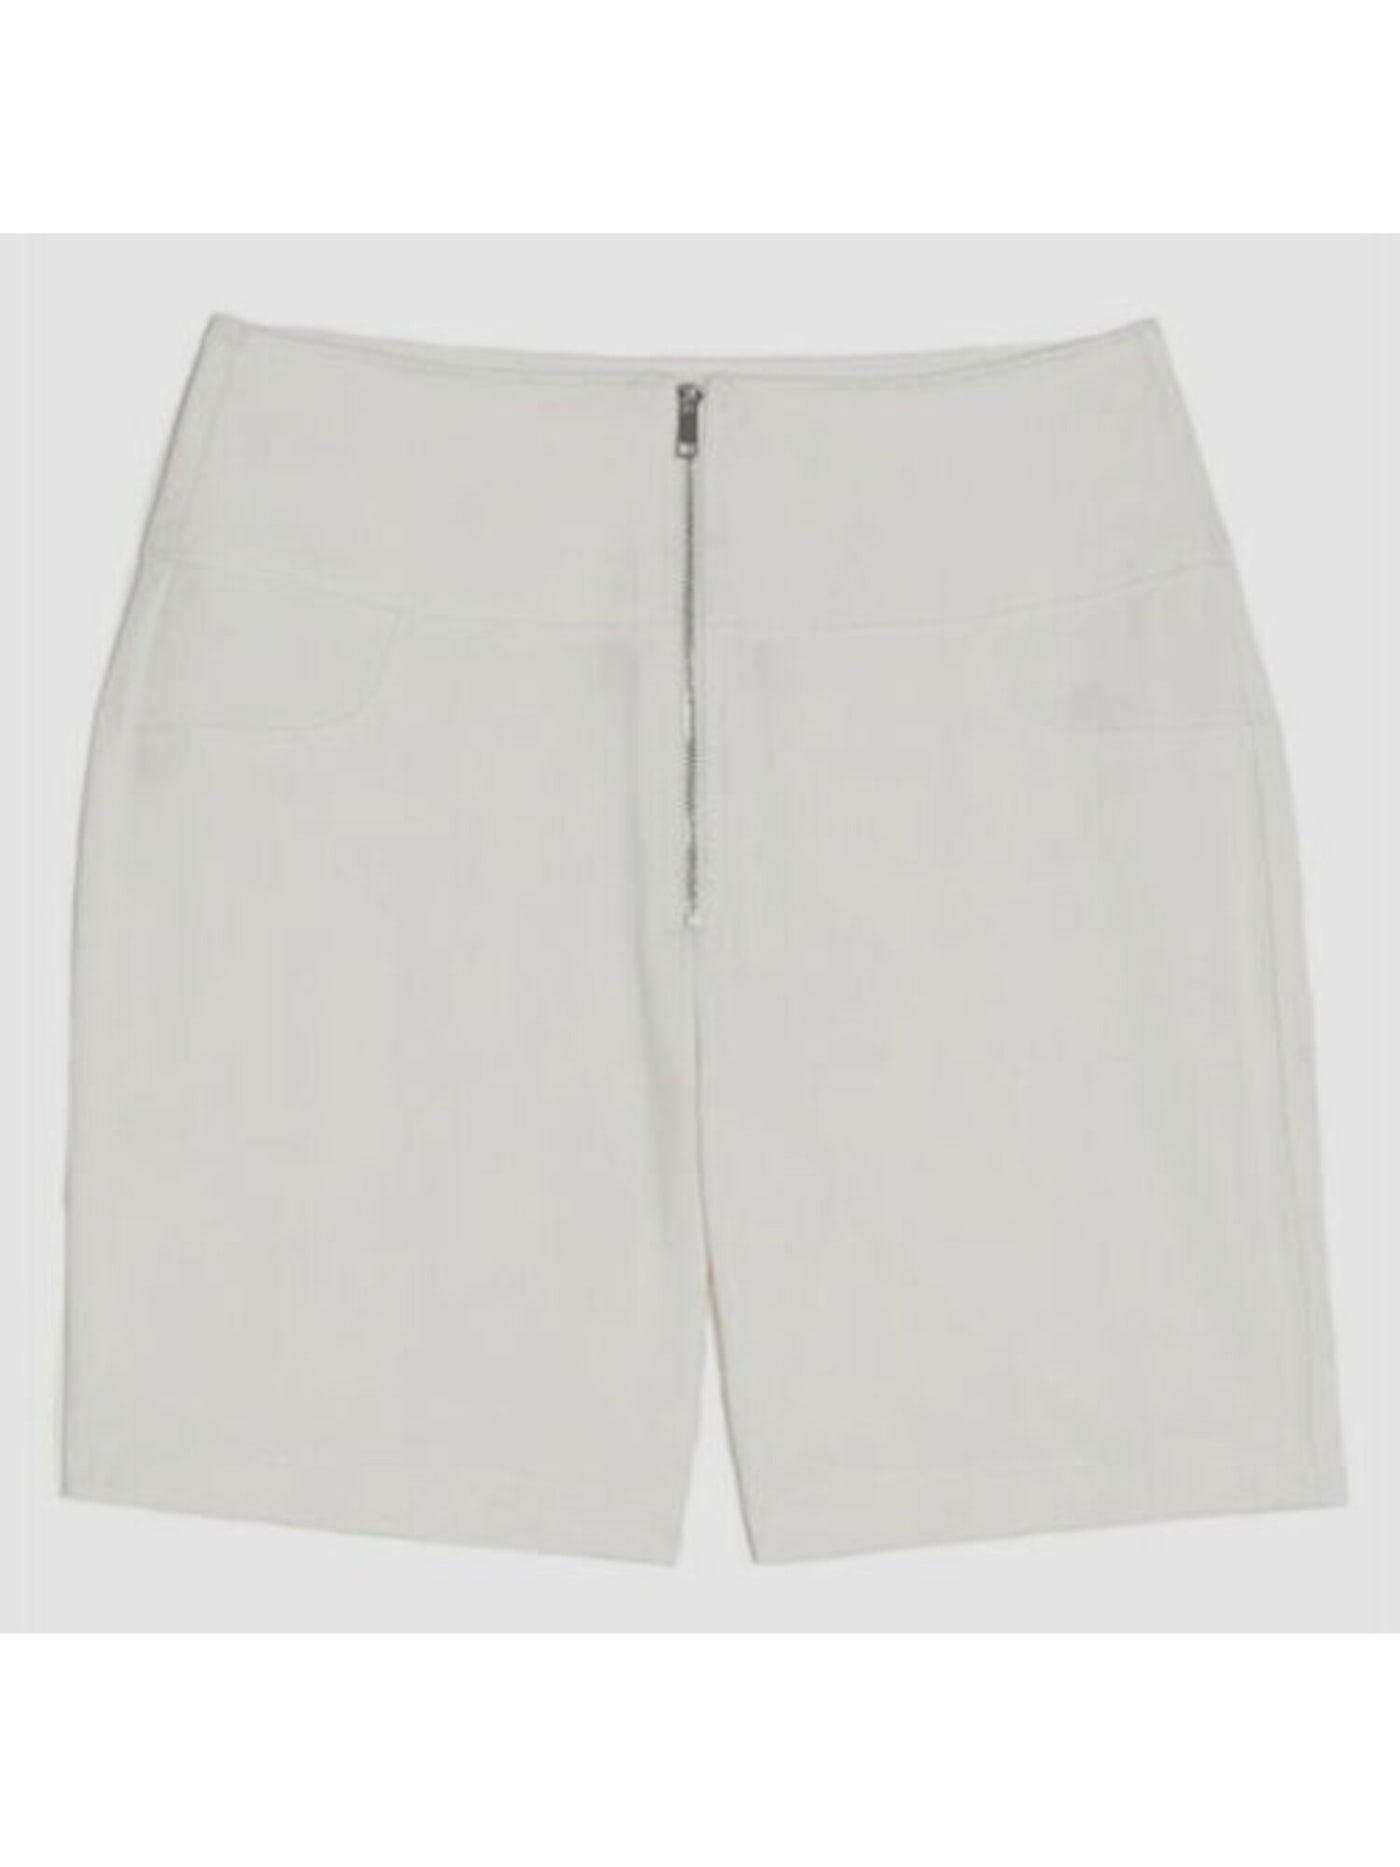 DANIELLE BERNSTEIN Womens Ivory Zippered Pocketed Shorts 2